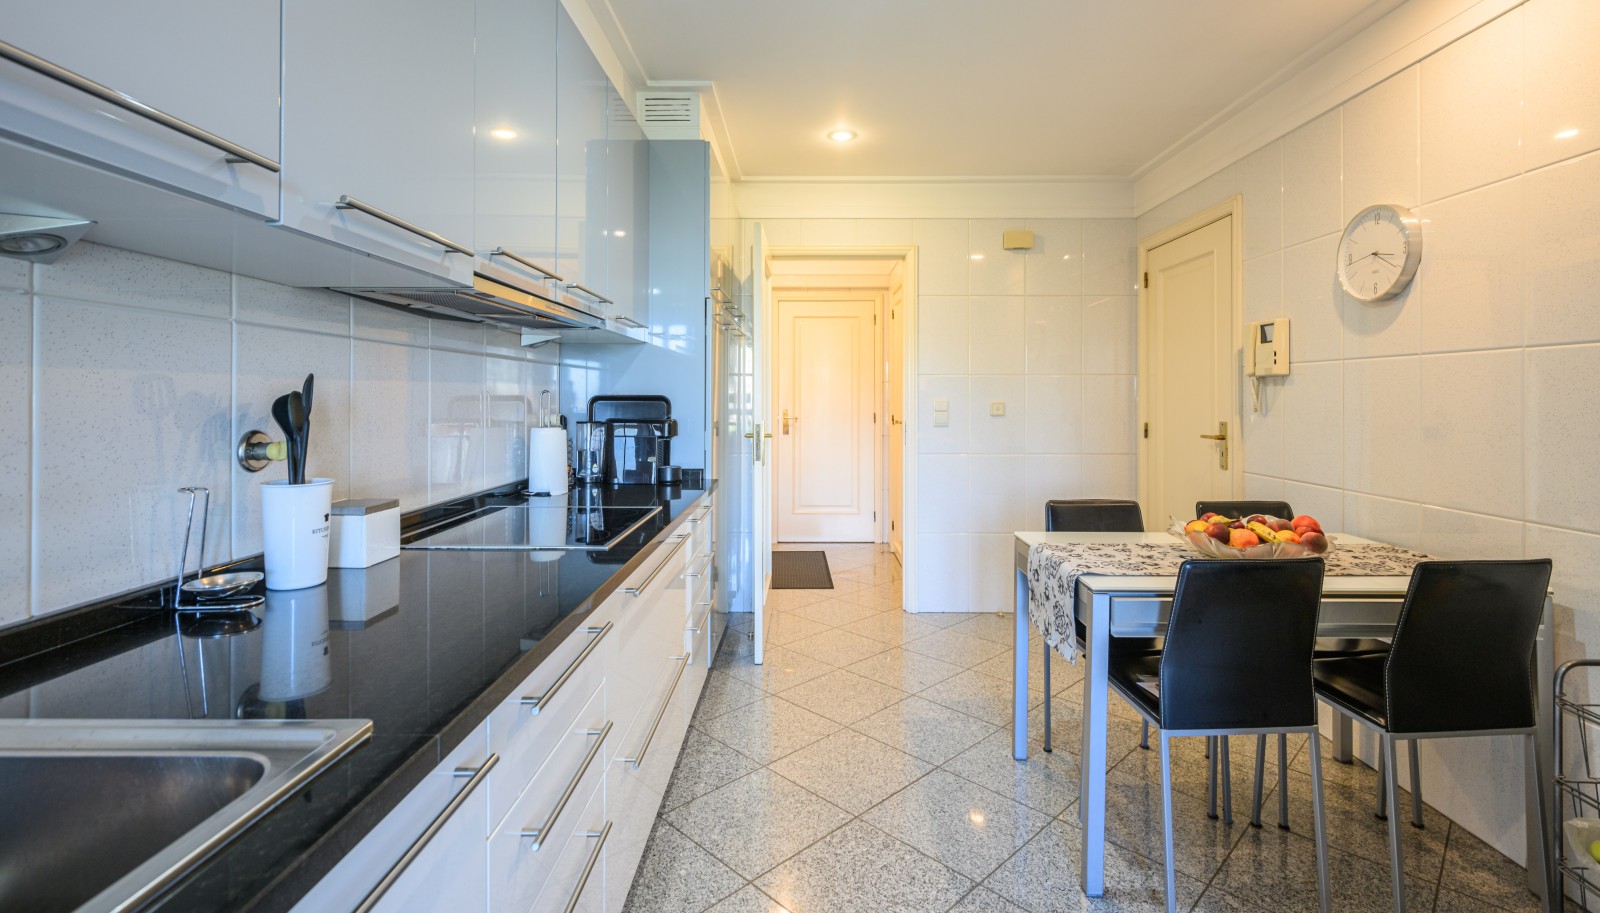 Appartement de 5 chambres avec balcon, à vendre, à V. N. Gaia, Porto, Portugal_236336